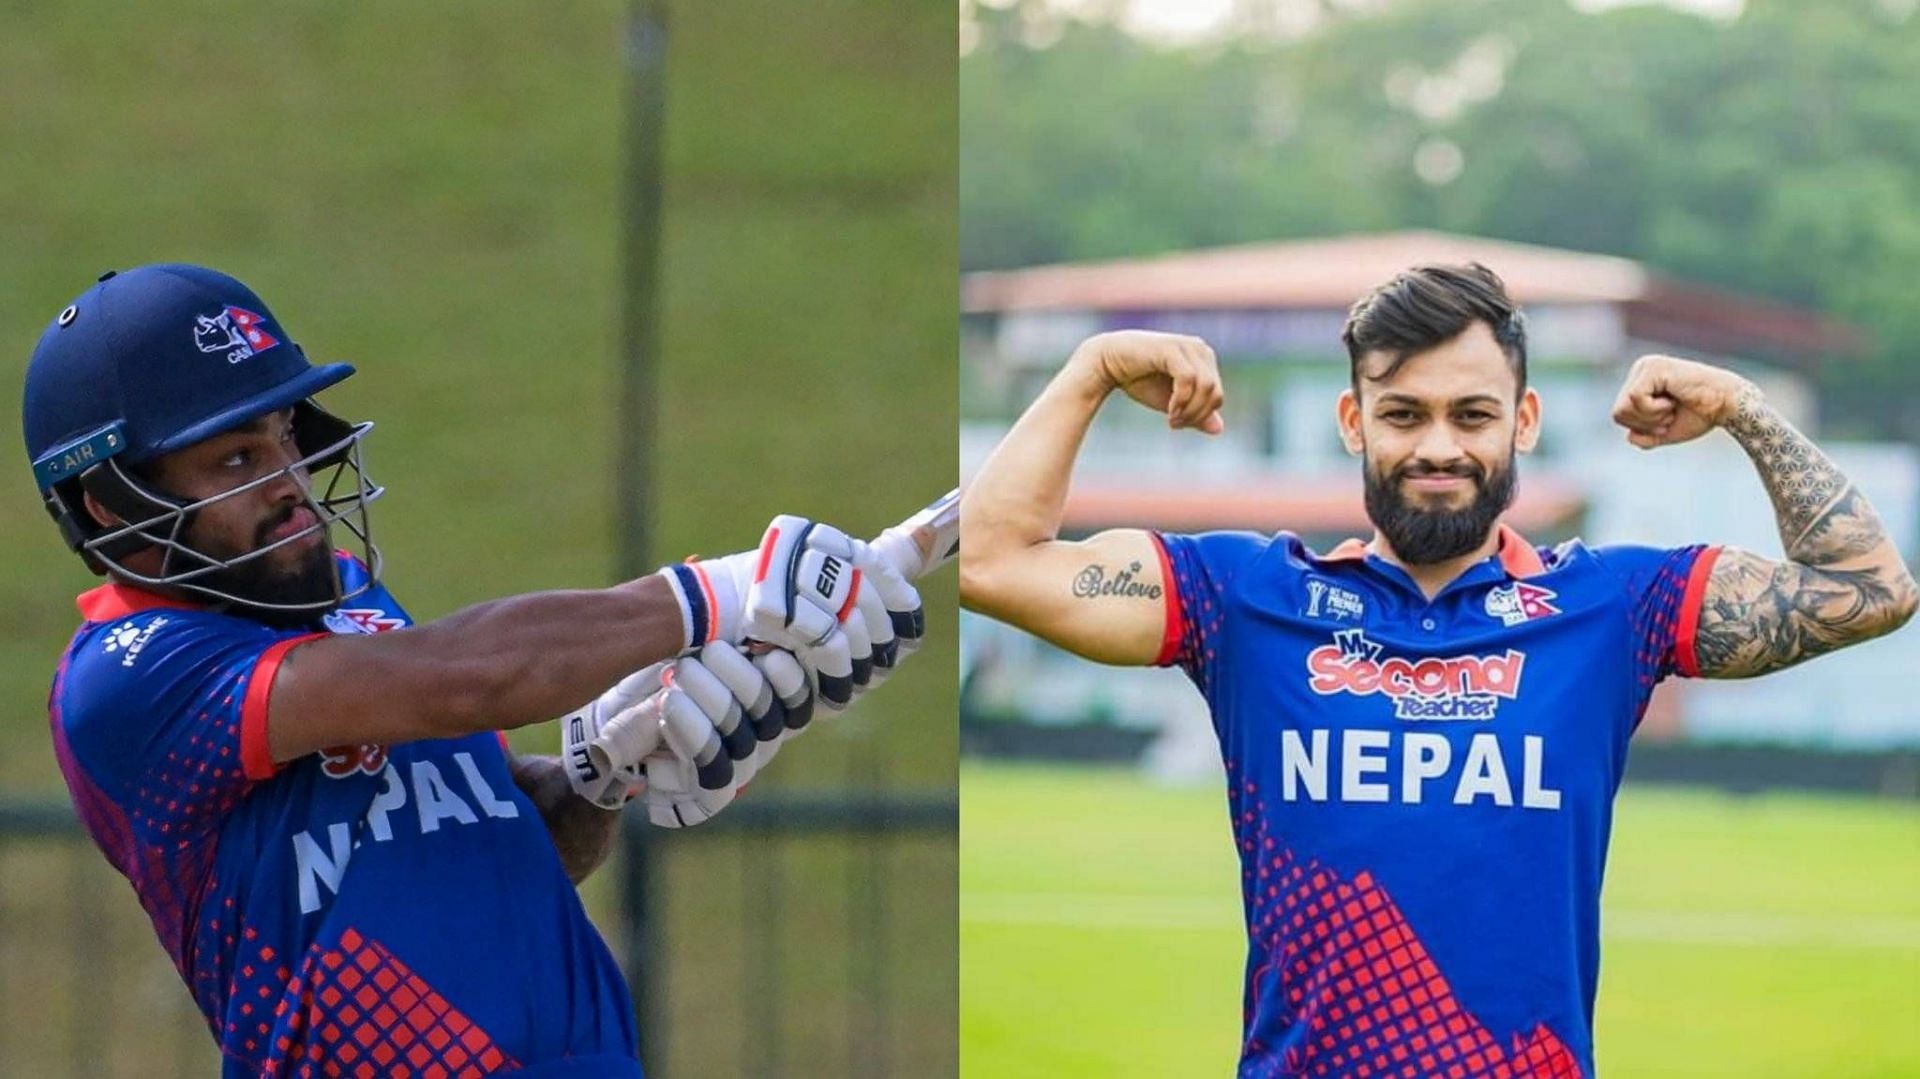 Kushal Bhurtel scored a quickfire 38 for Nepal against India (Image: X)